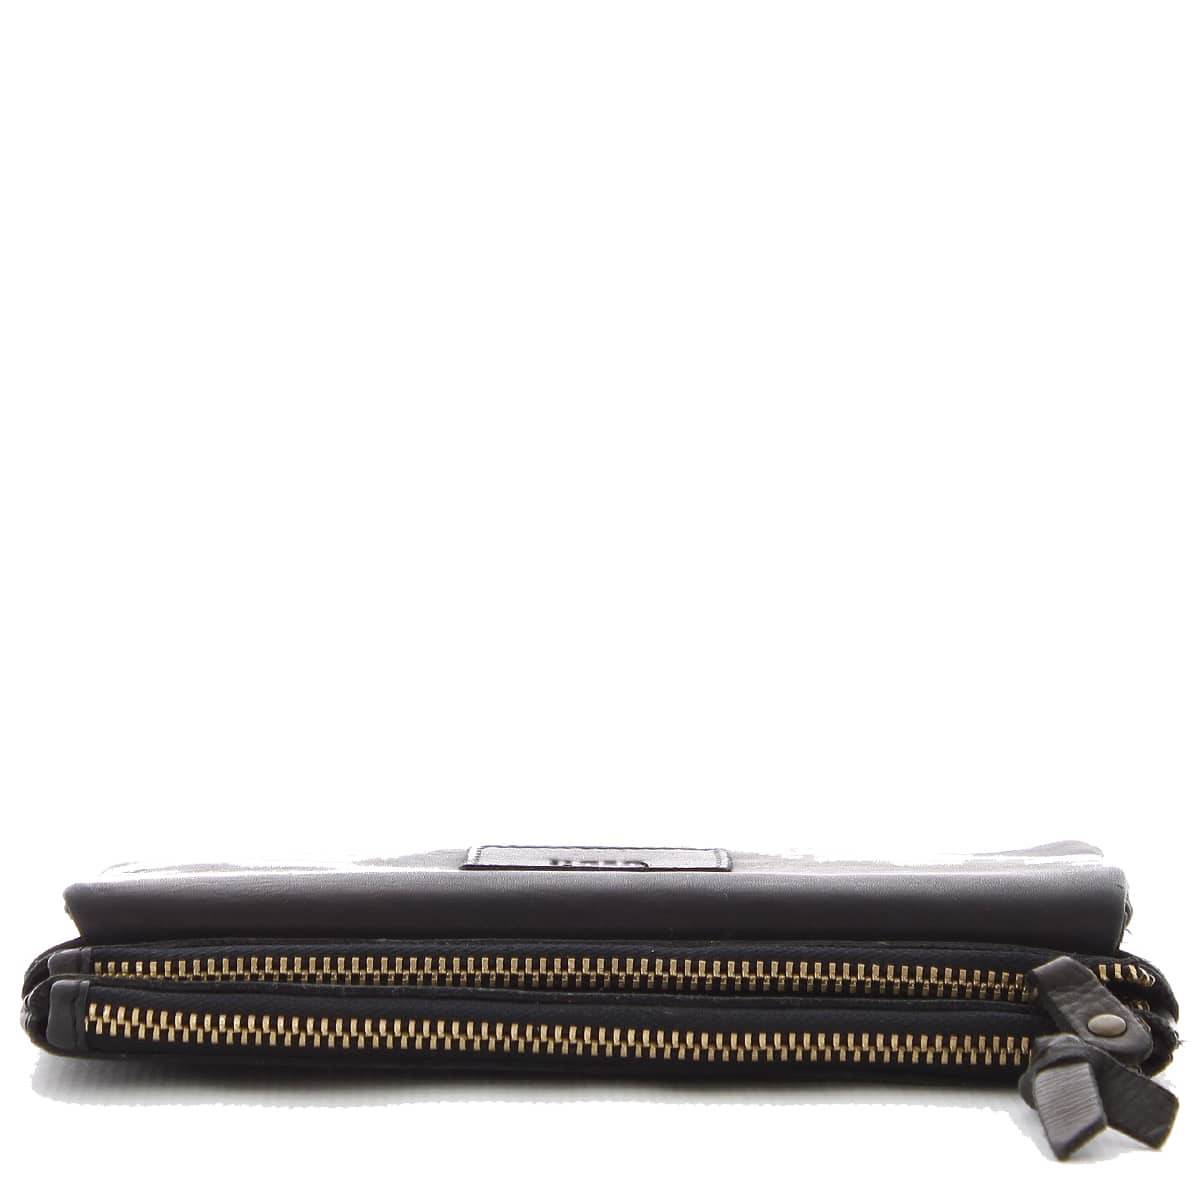 Grand portefeuille zippé cuir Biba Kansas KA4 NEGRO / Noir double compartiment